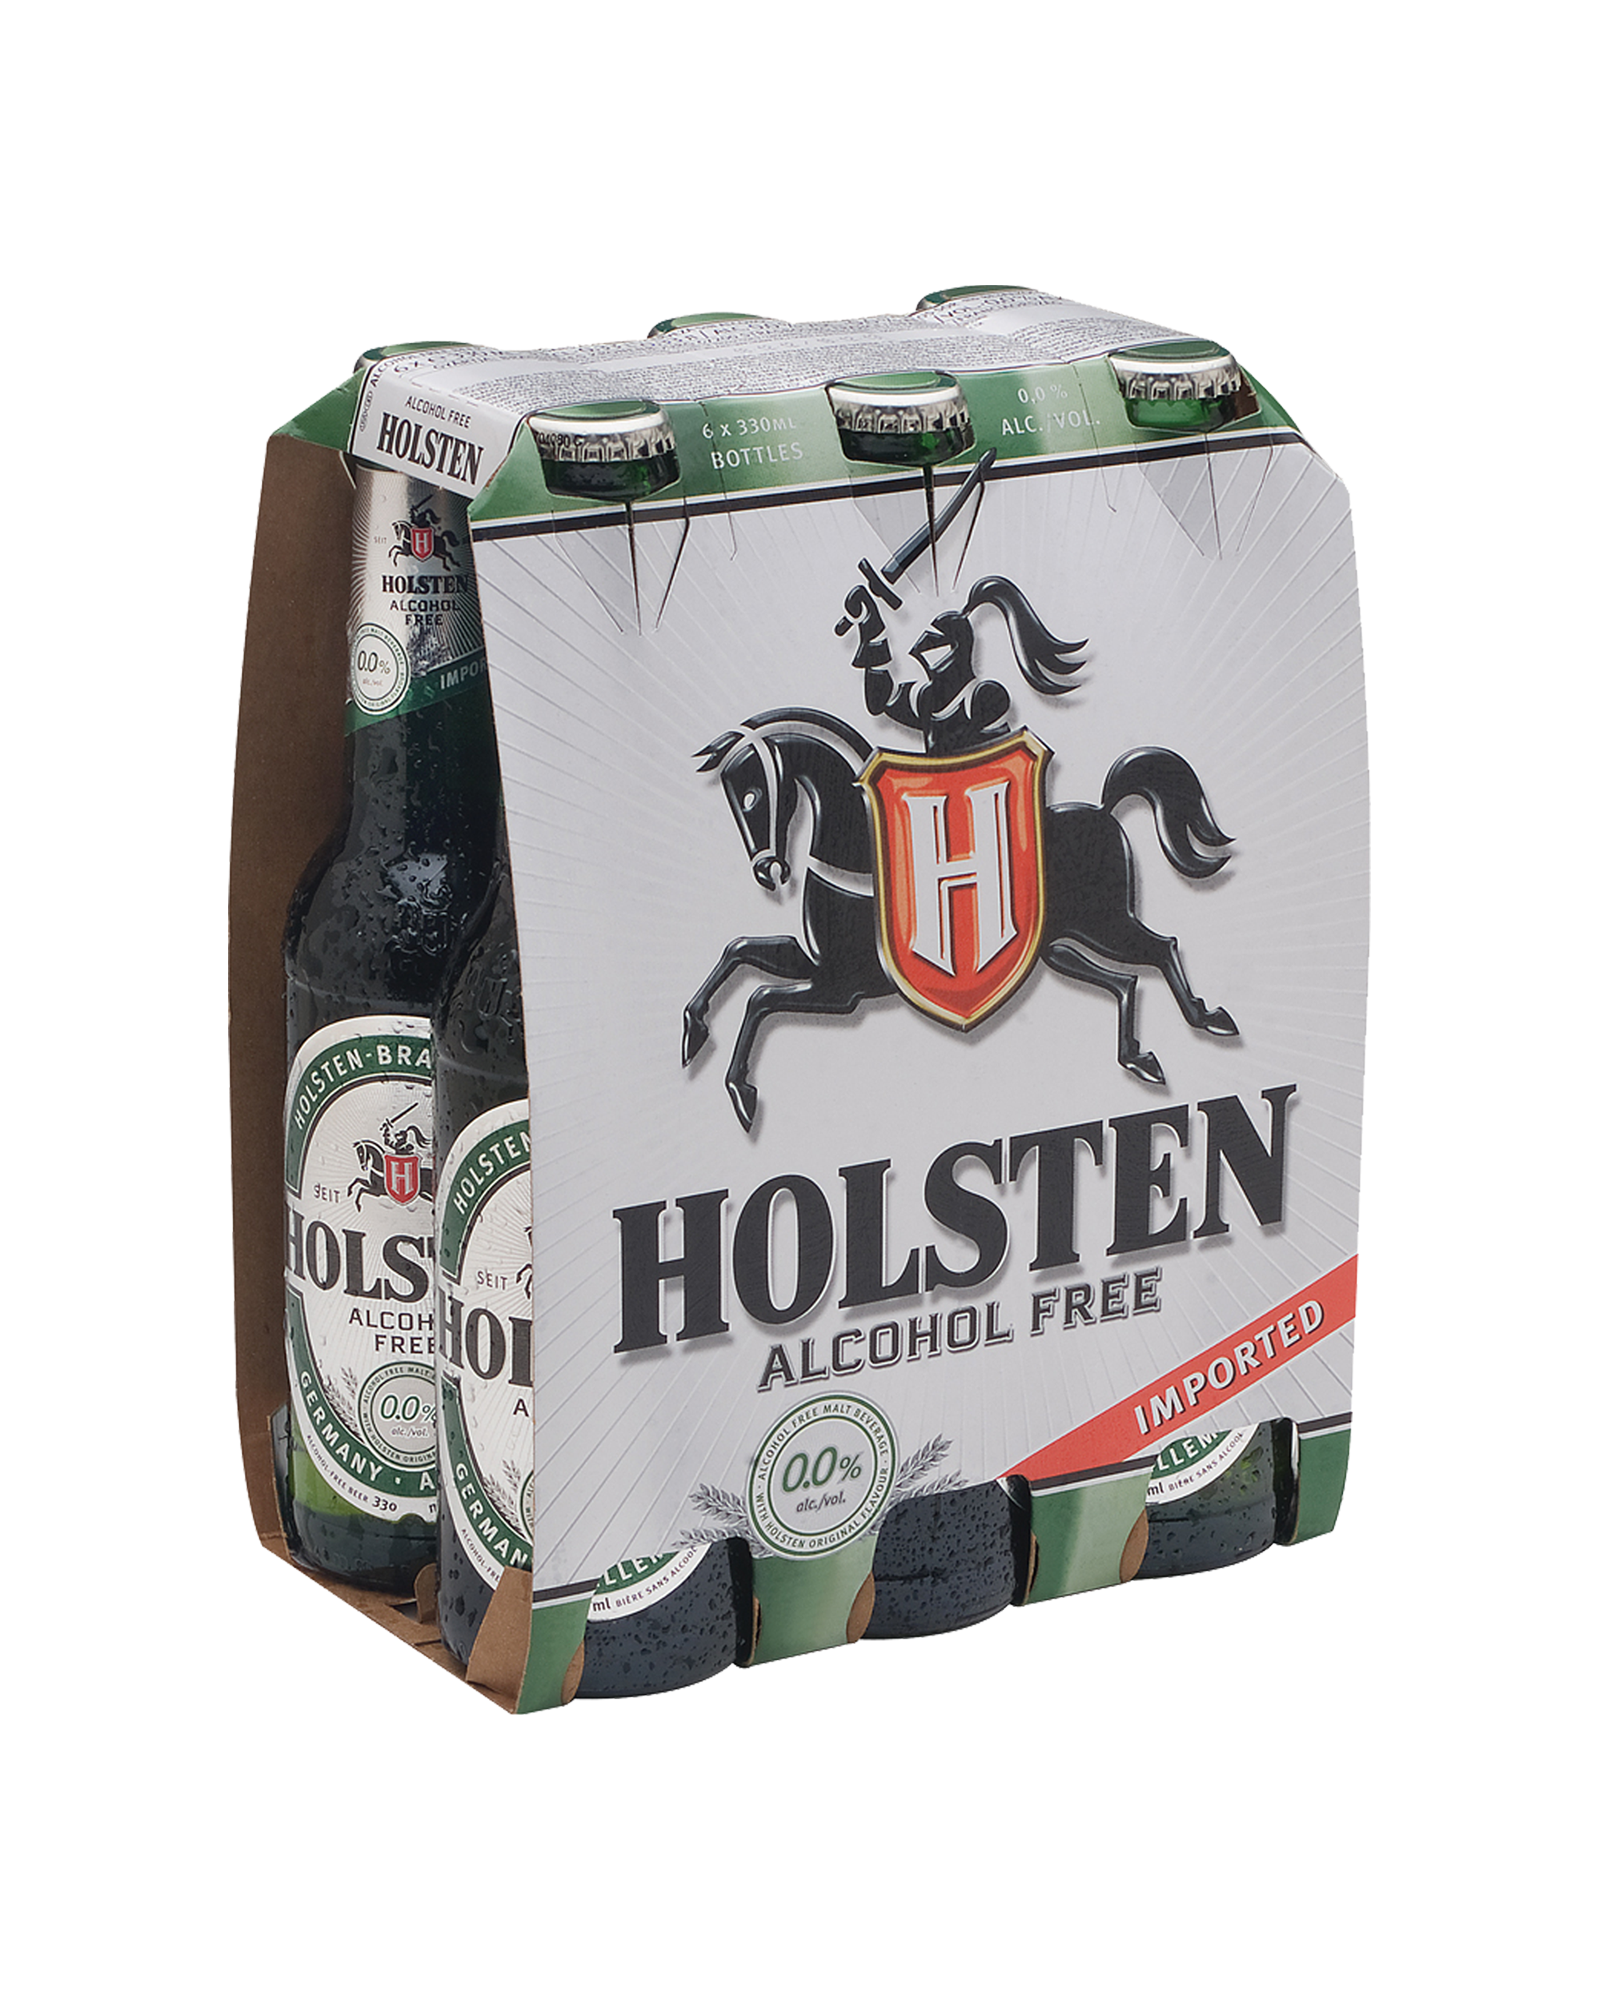 Holsten Pilsner German Alcohol Free 0.0% Beer 330mL Bottles